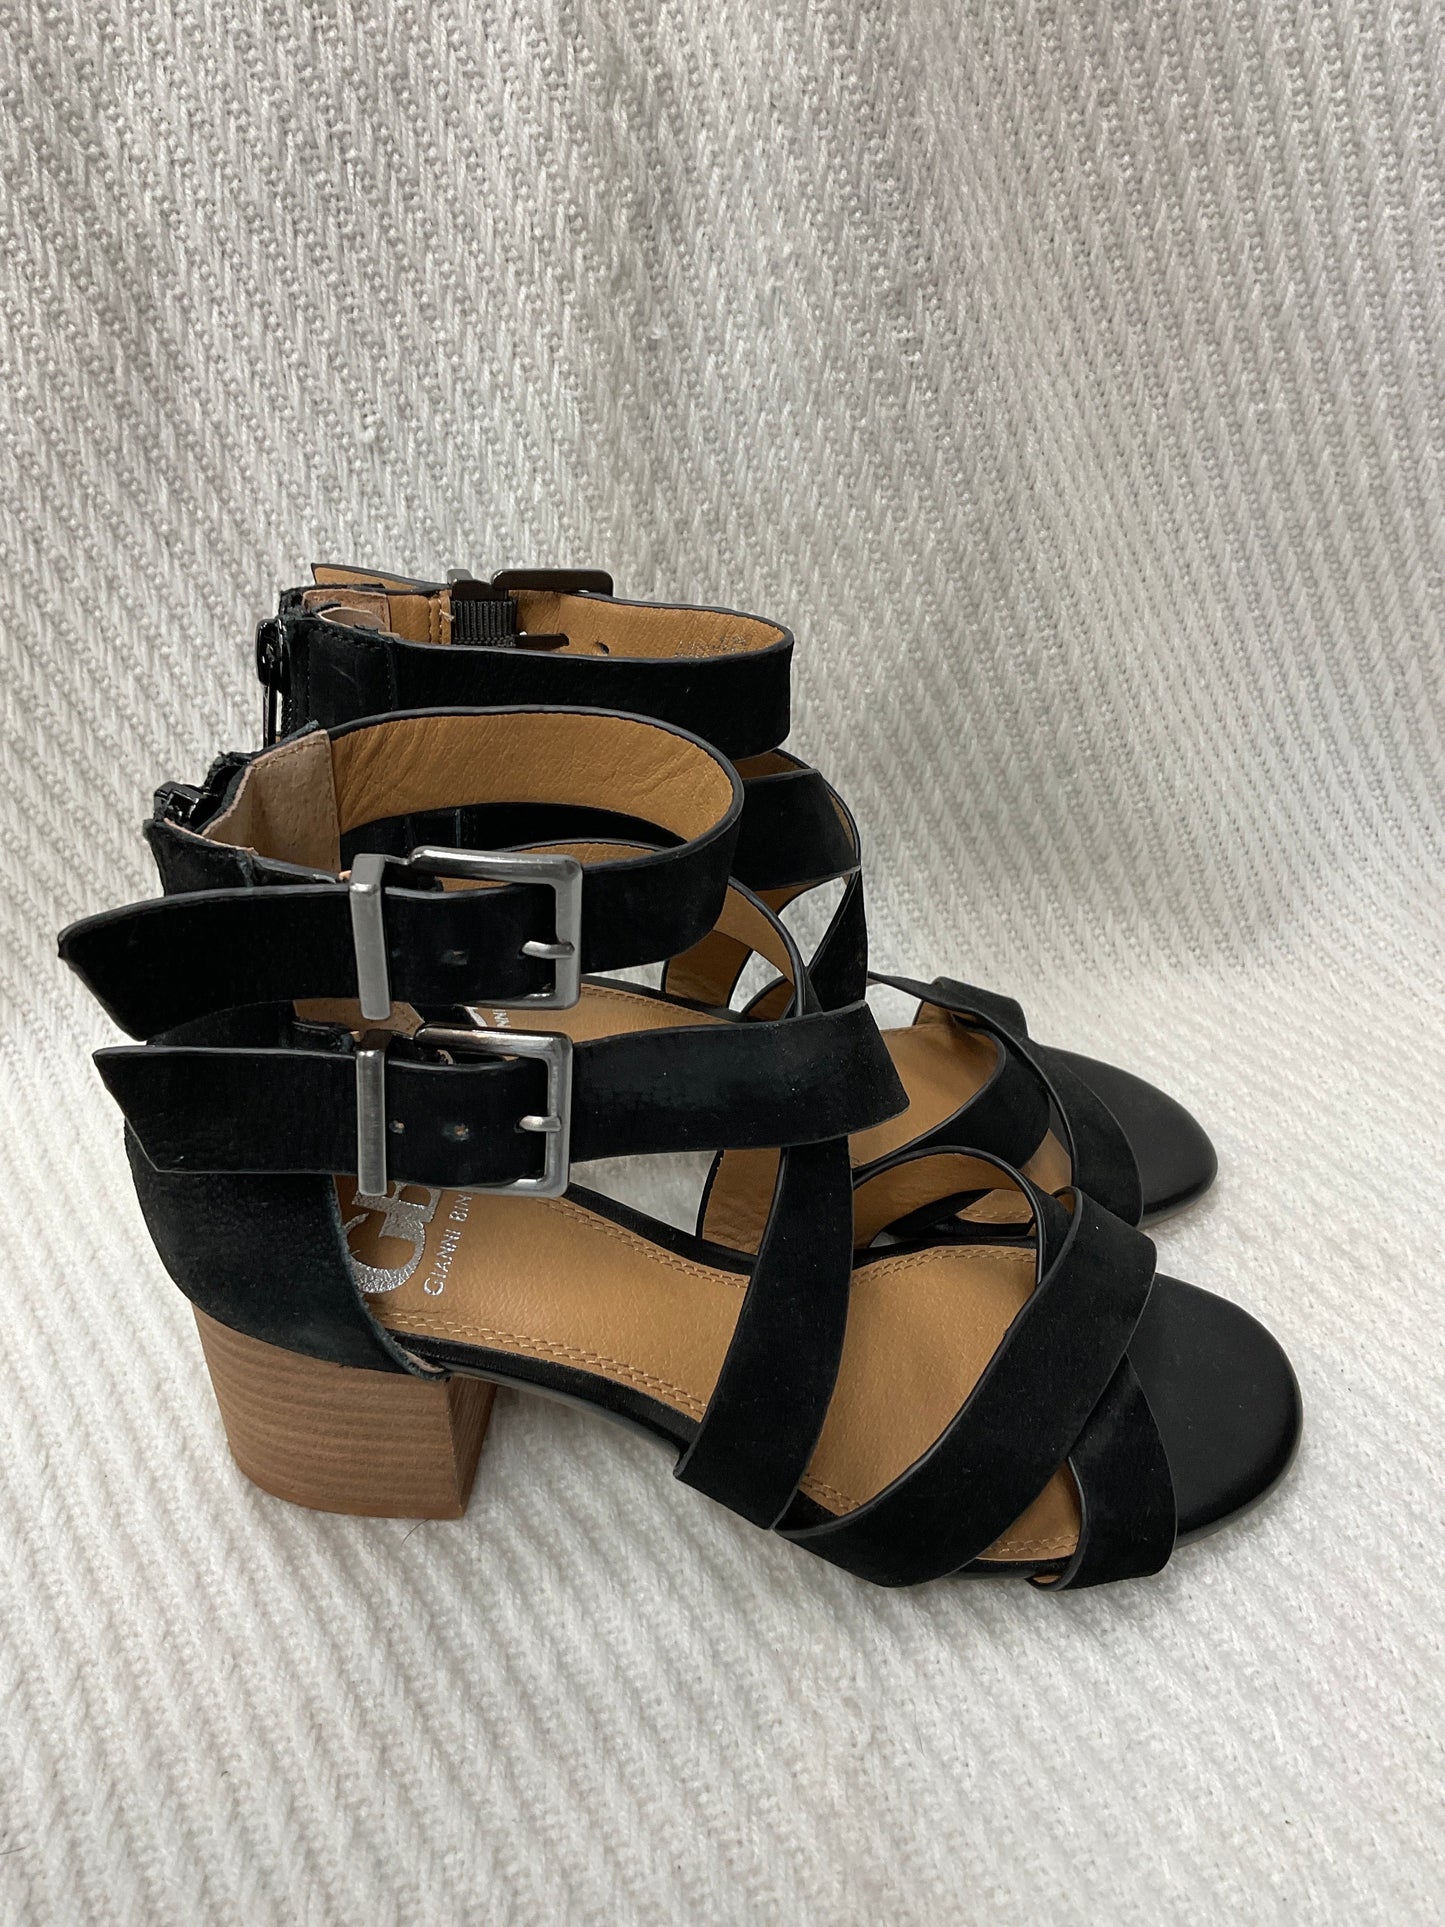 Sandals Heels Block By Gianni Bini  Size: 6.5